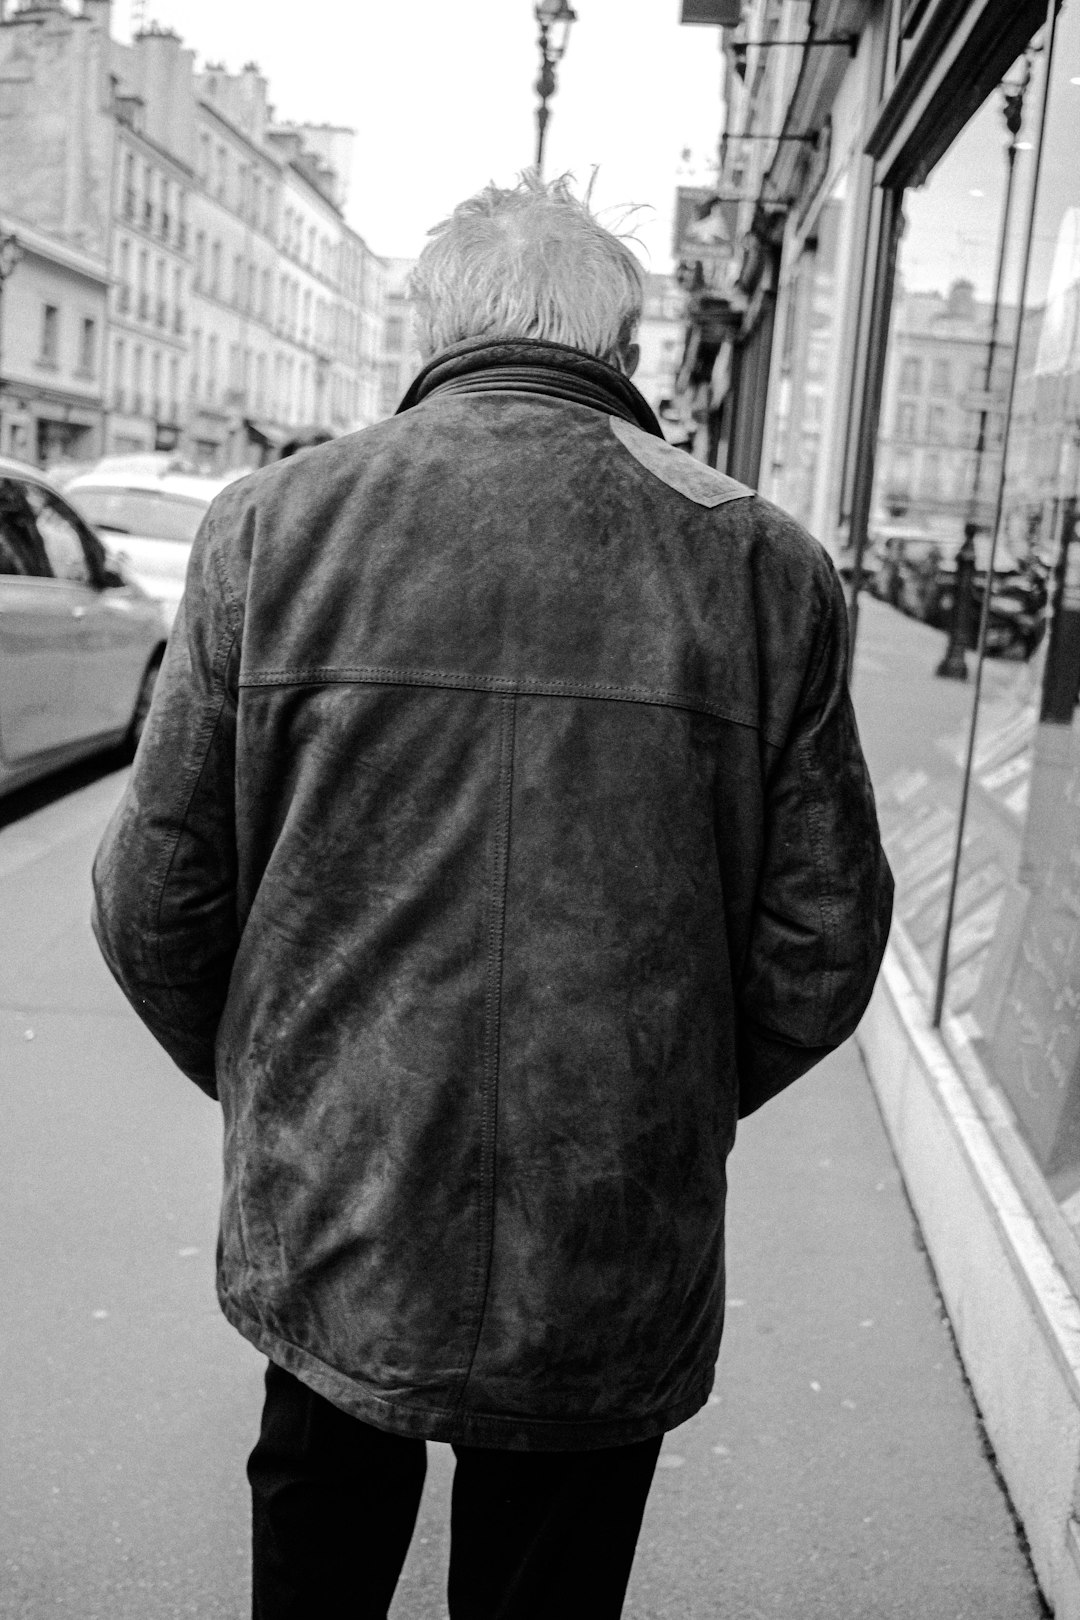 grayscale photo of man in jacket standing on sidewalk